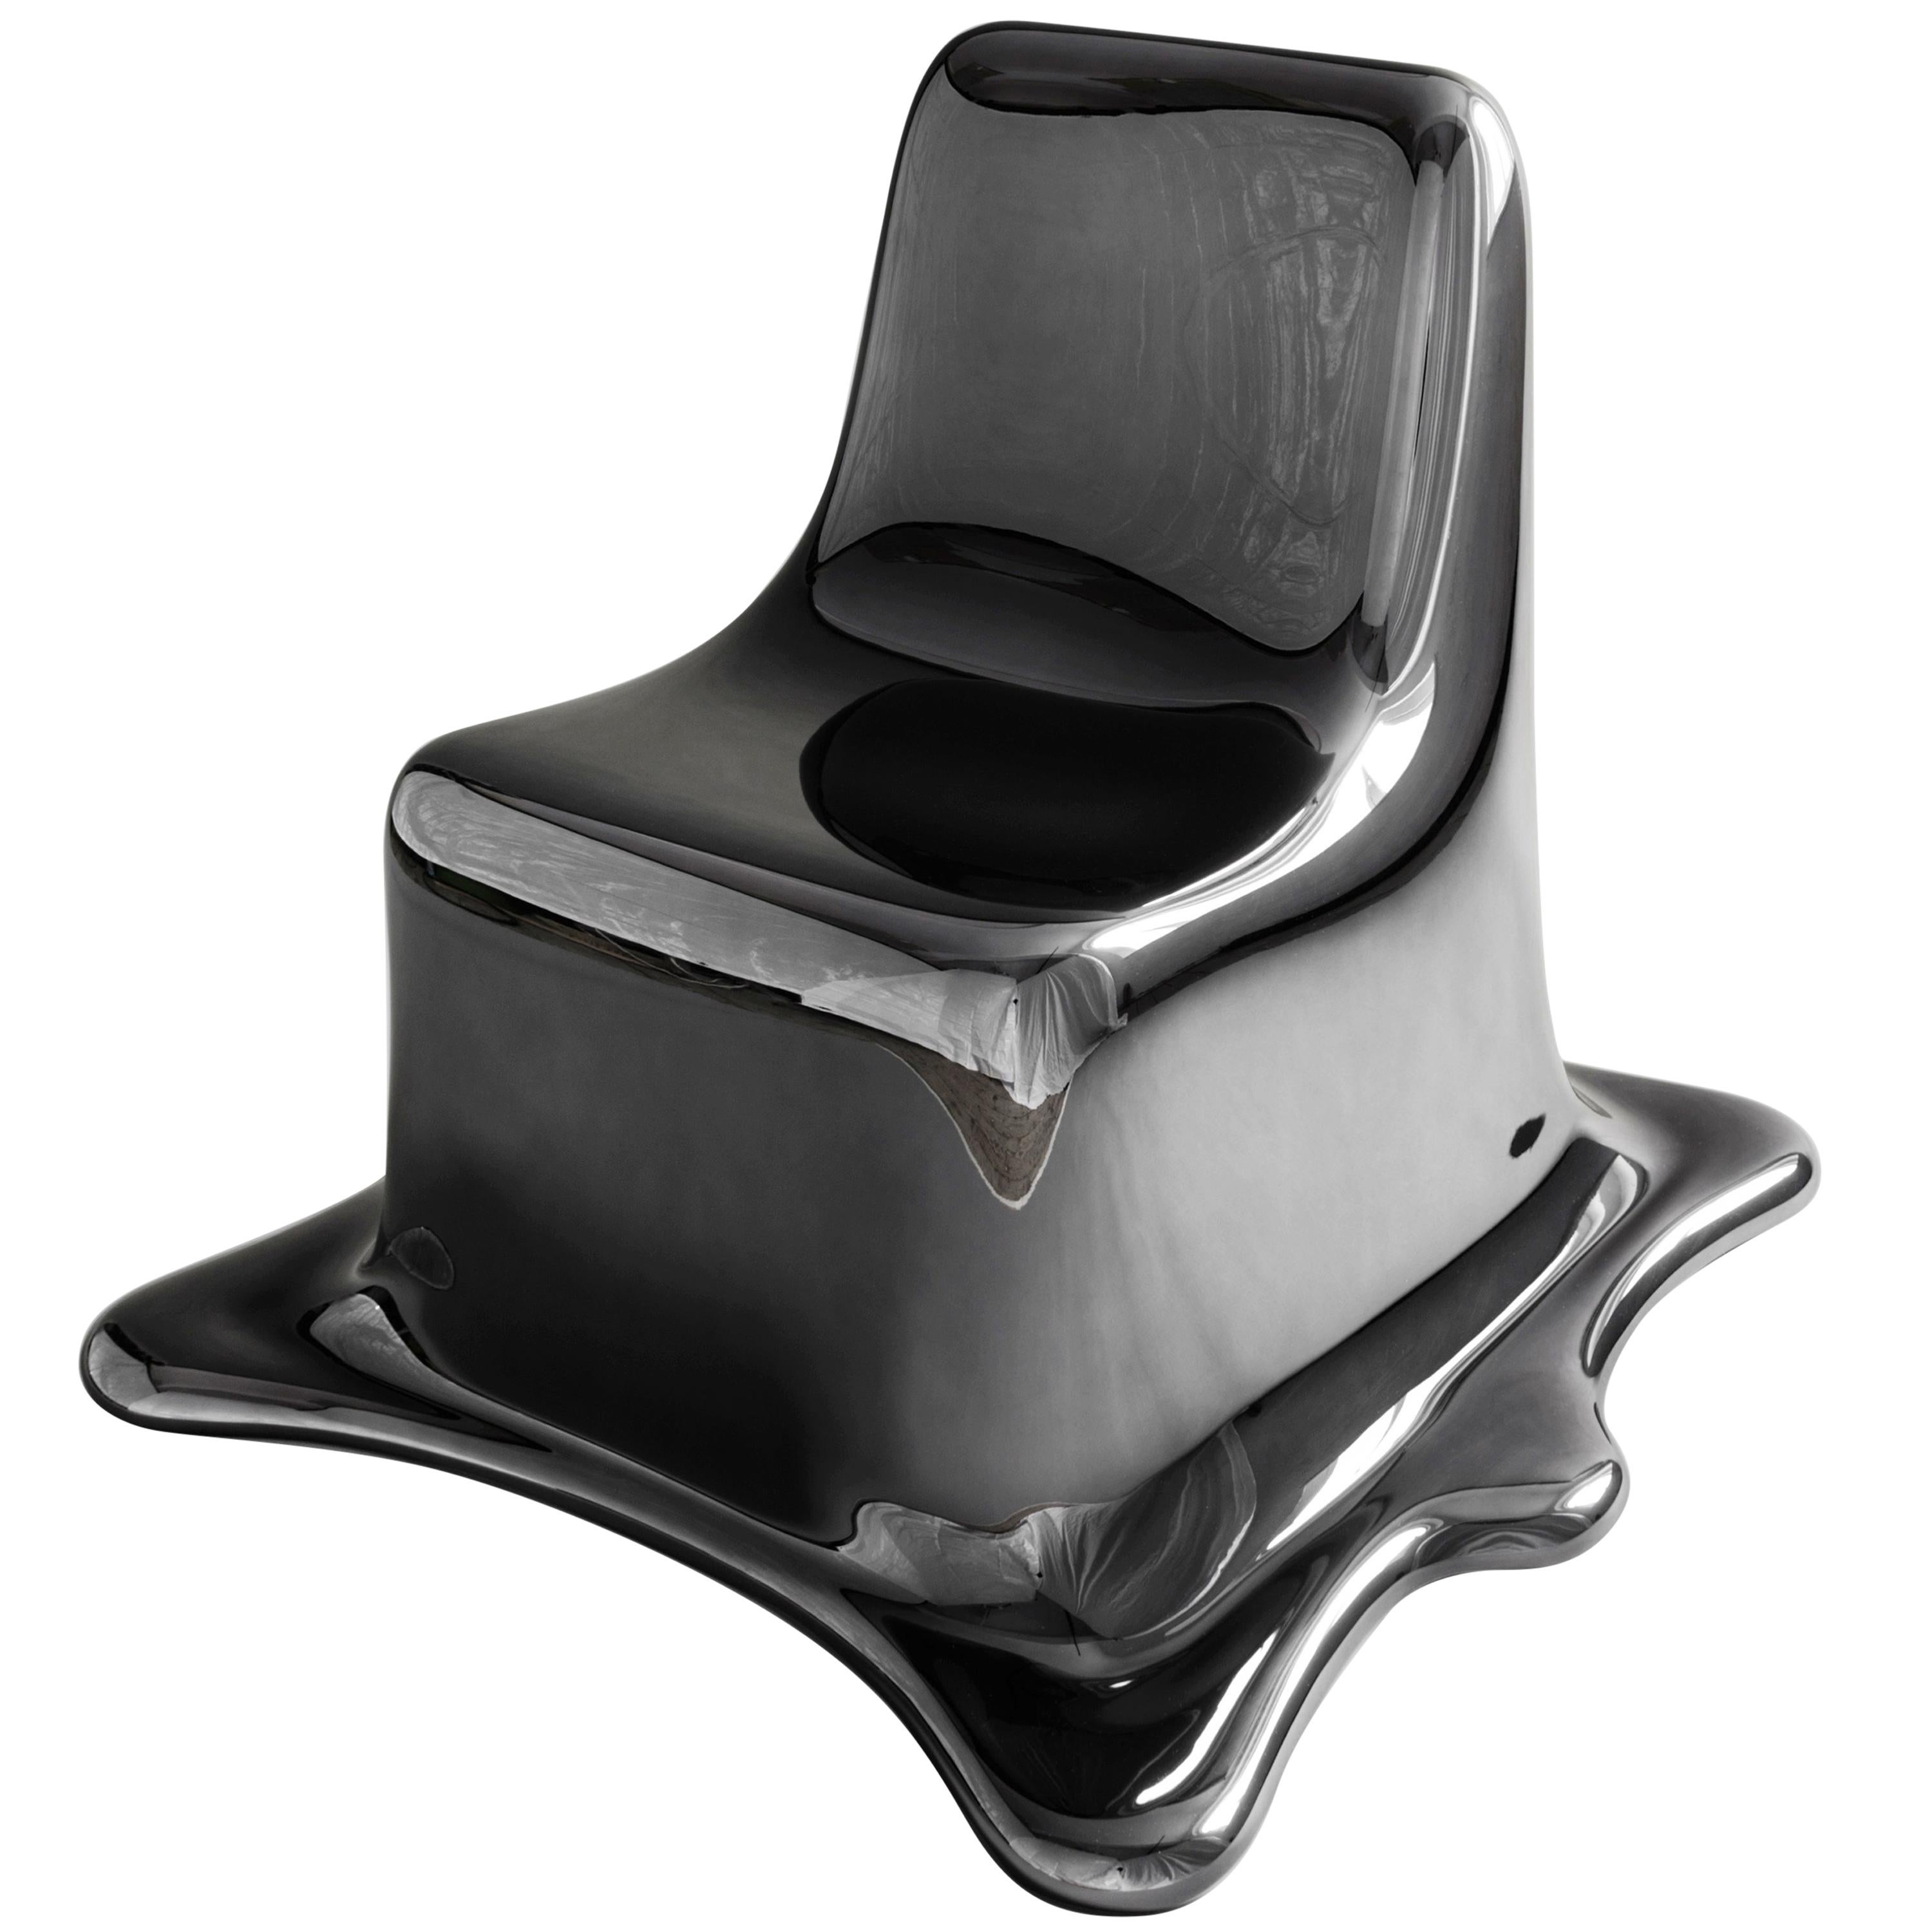 Black Chrome Melting Chair by Philipp Aduatz